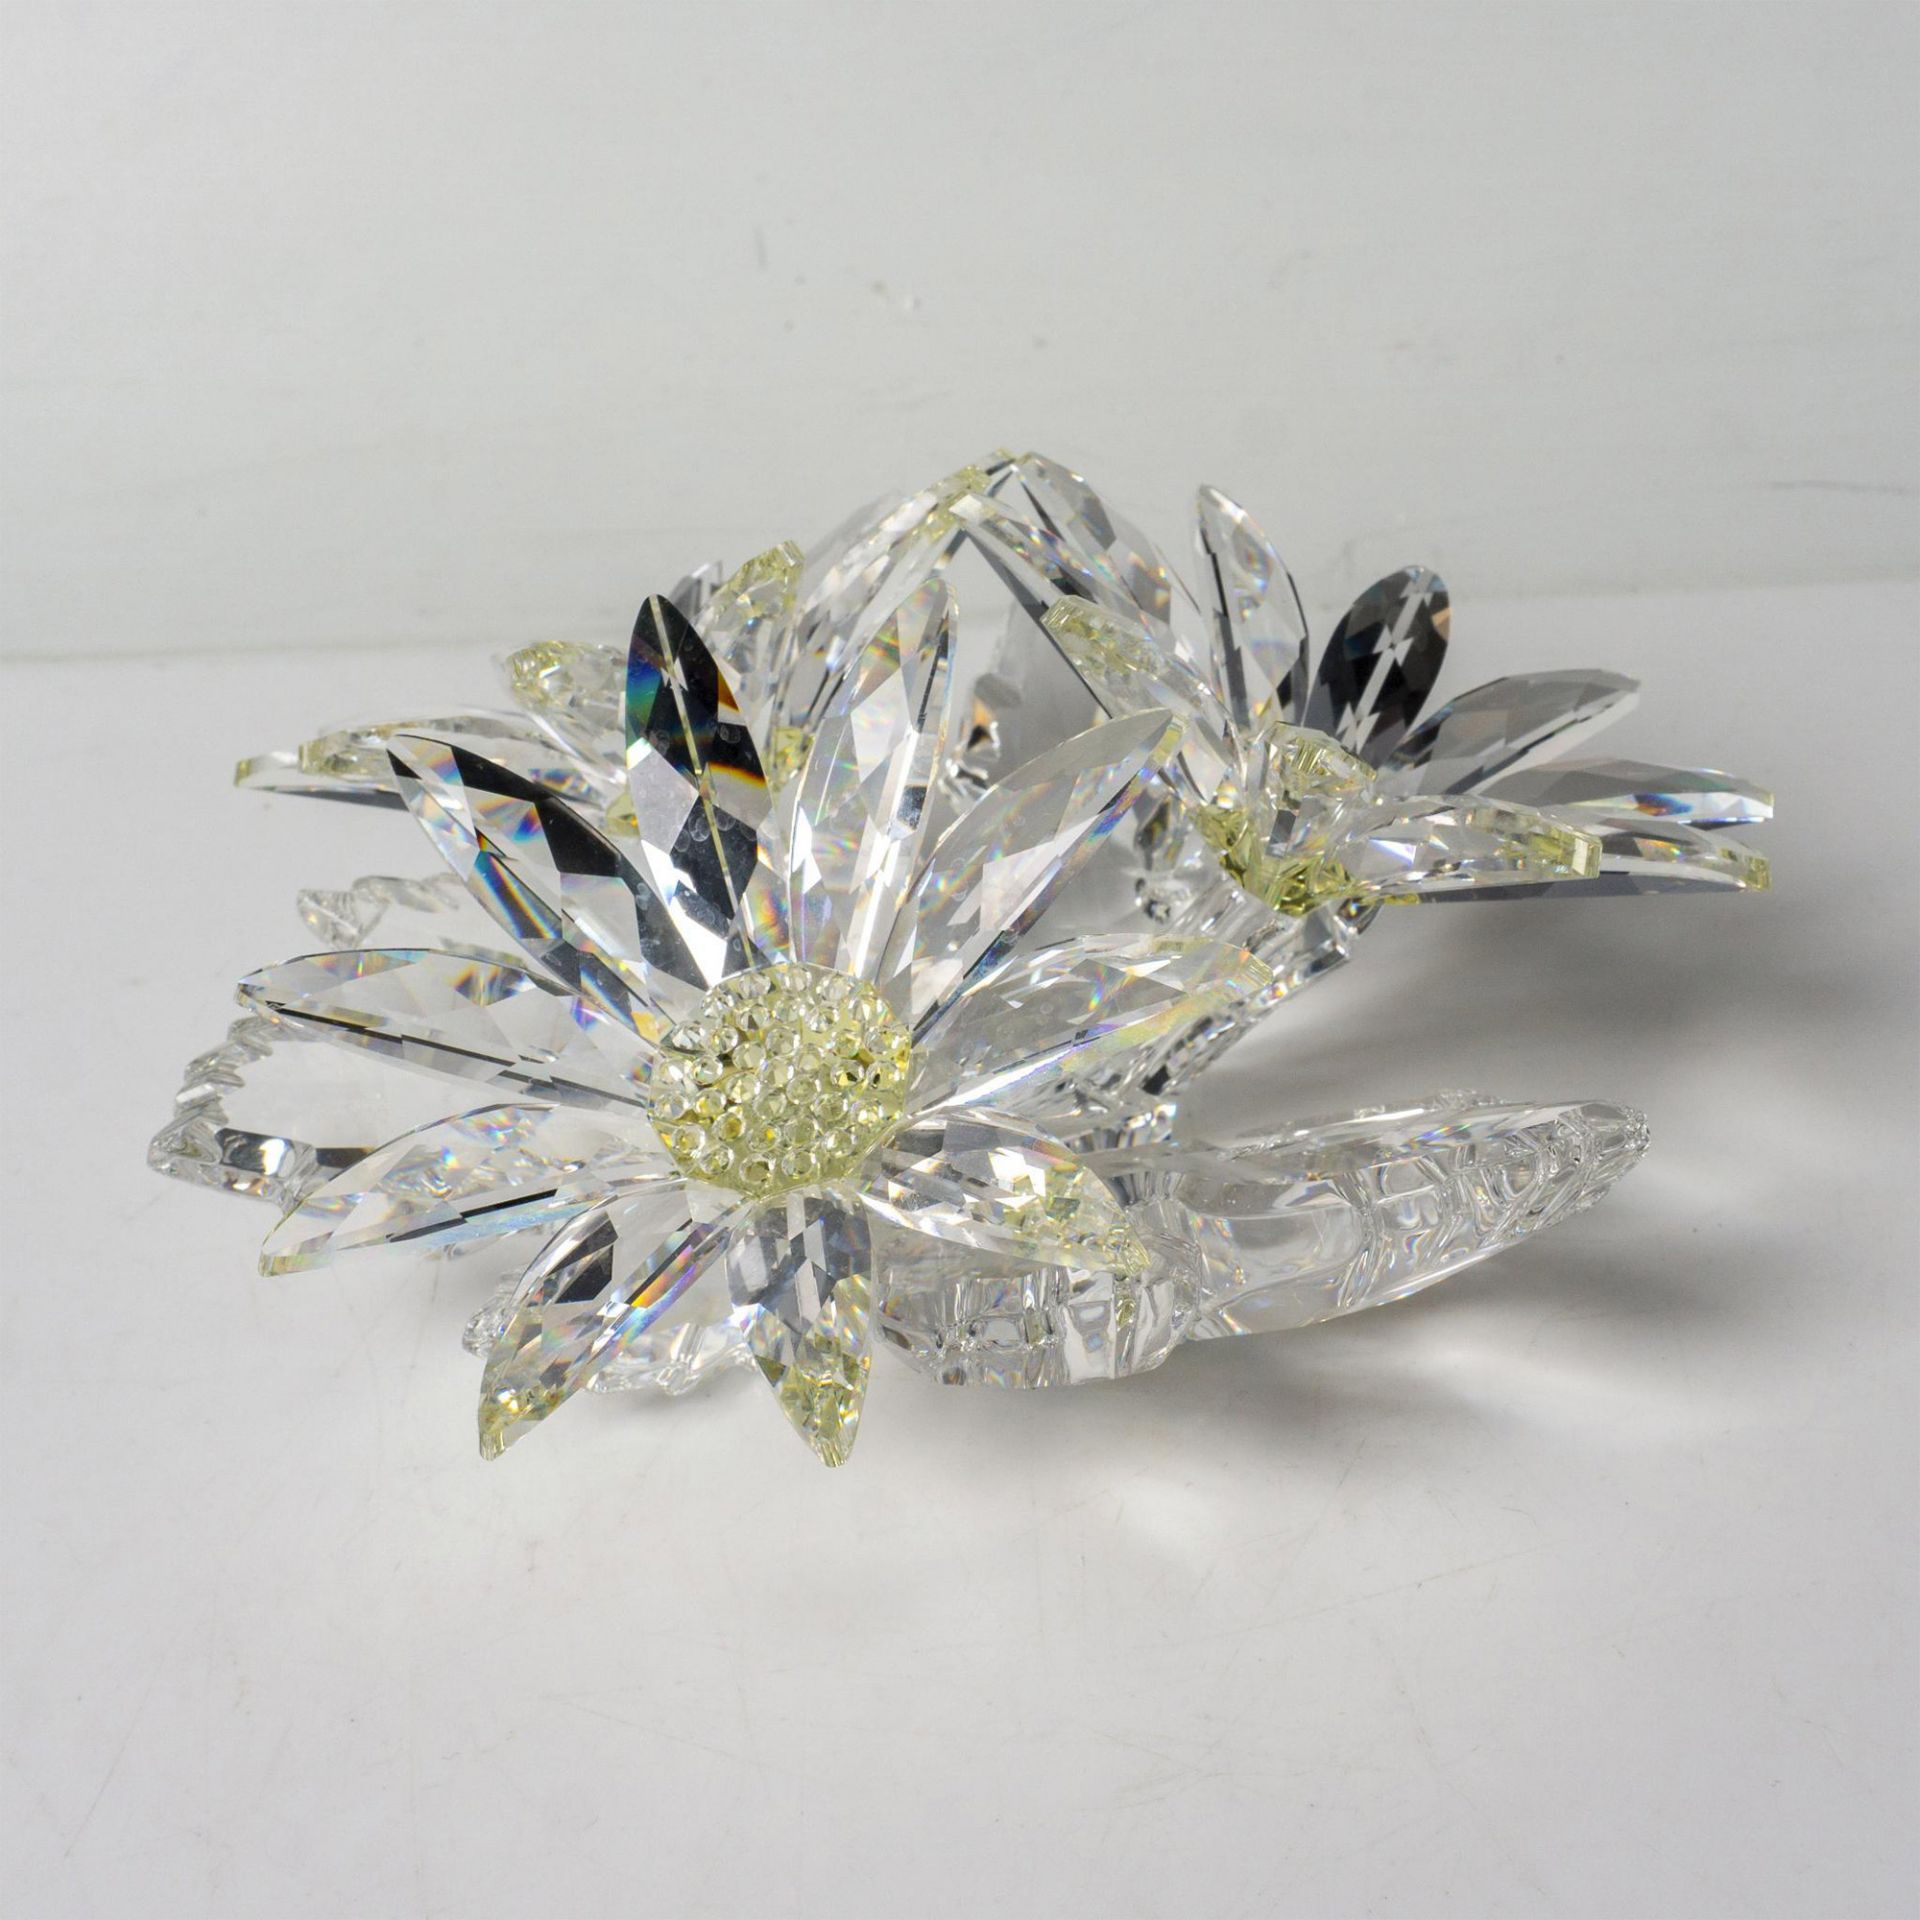 Swarovski Crystal Figurine, Maxi Flower Arrangement - Image 4 of 5